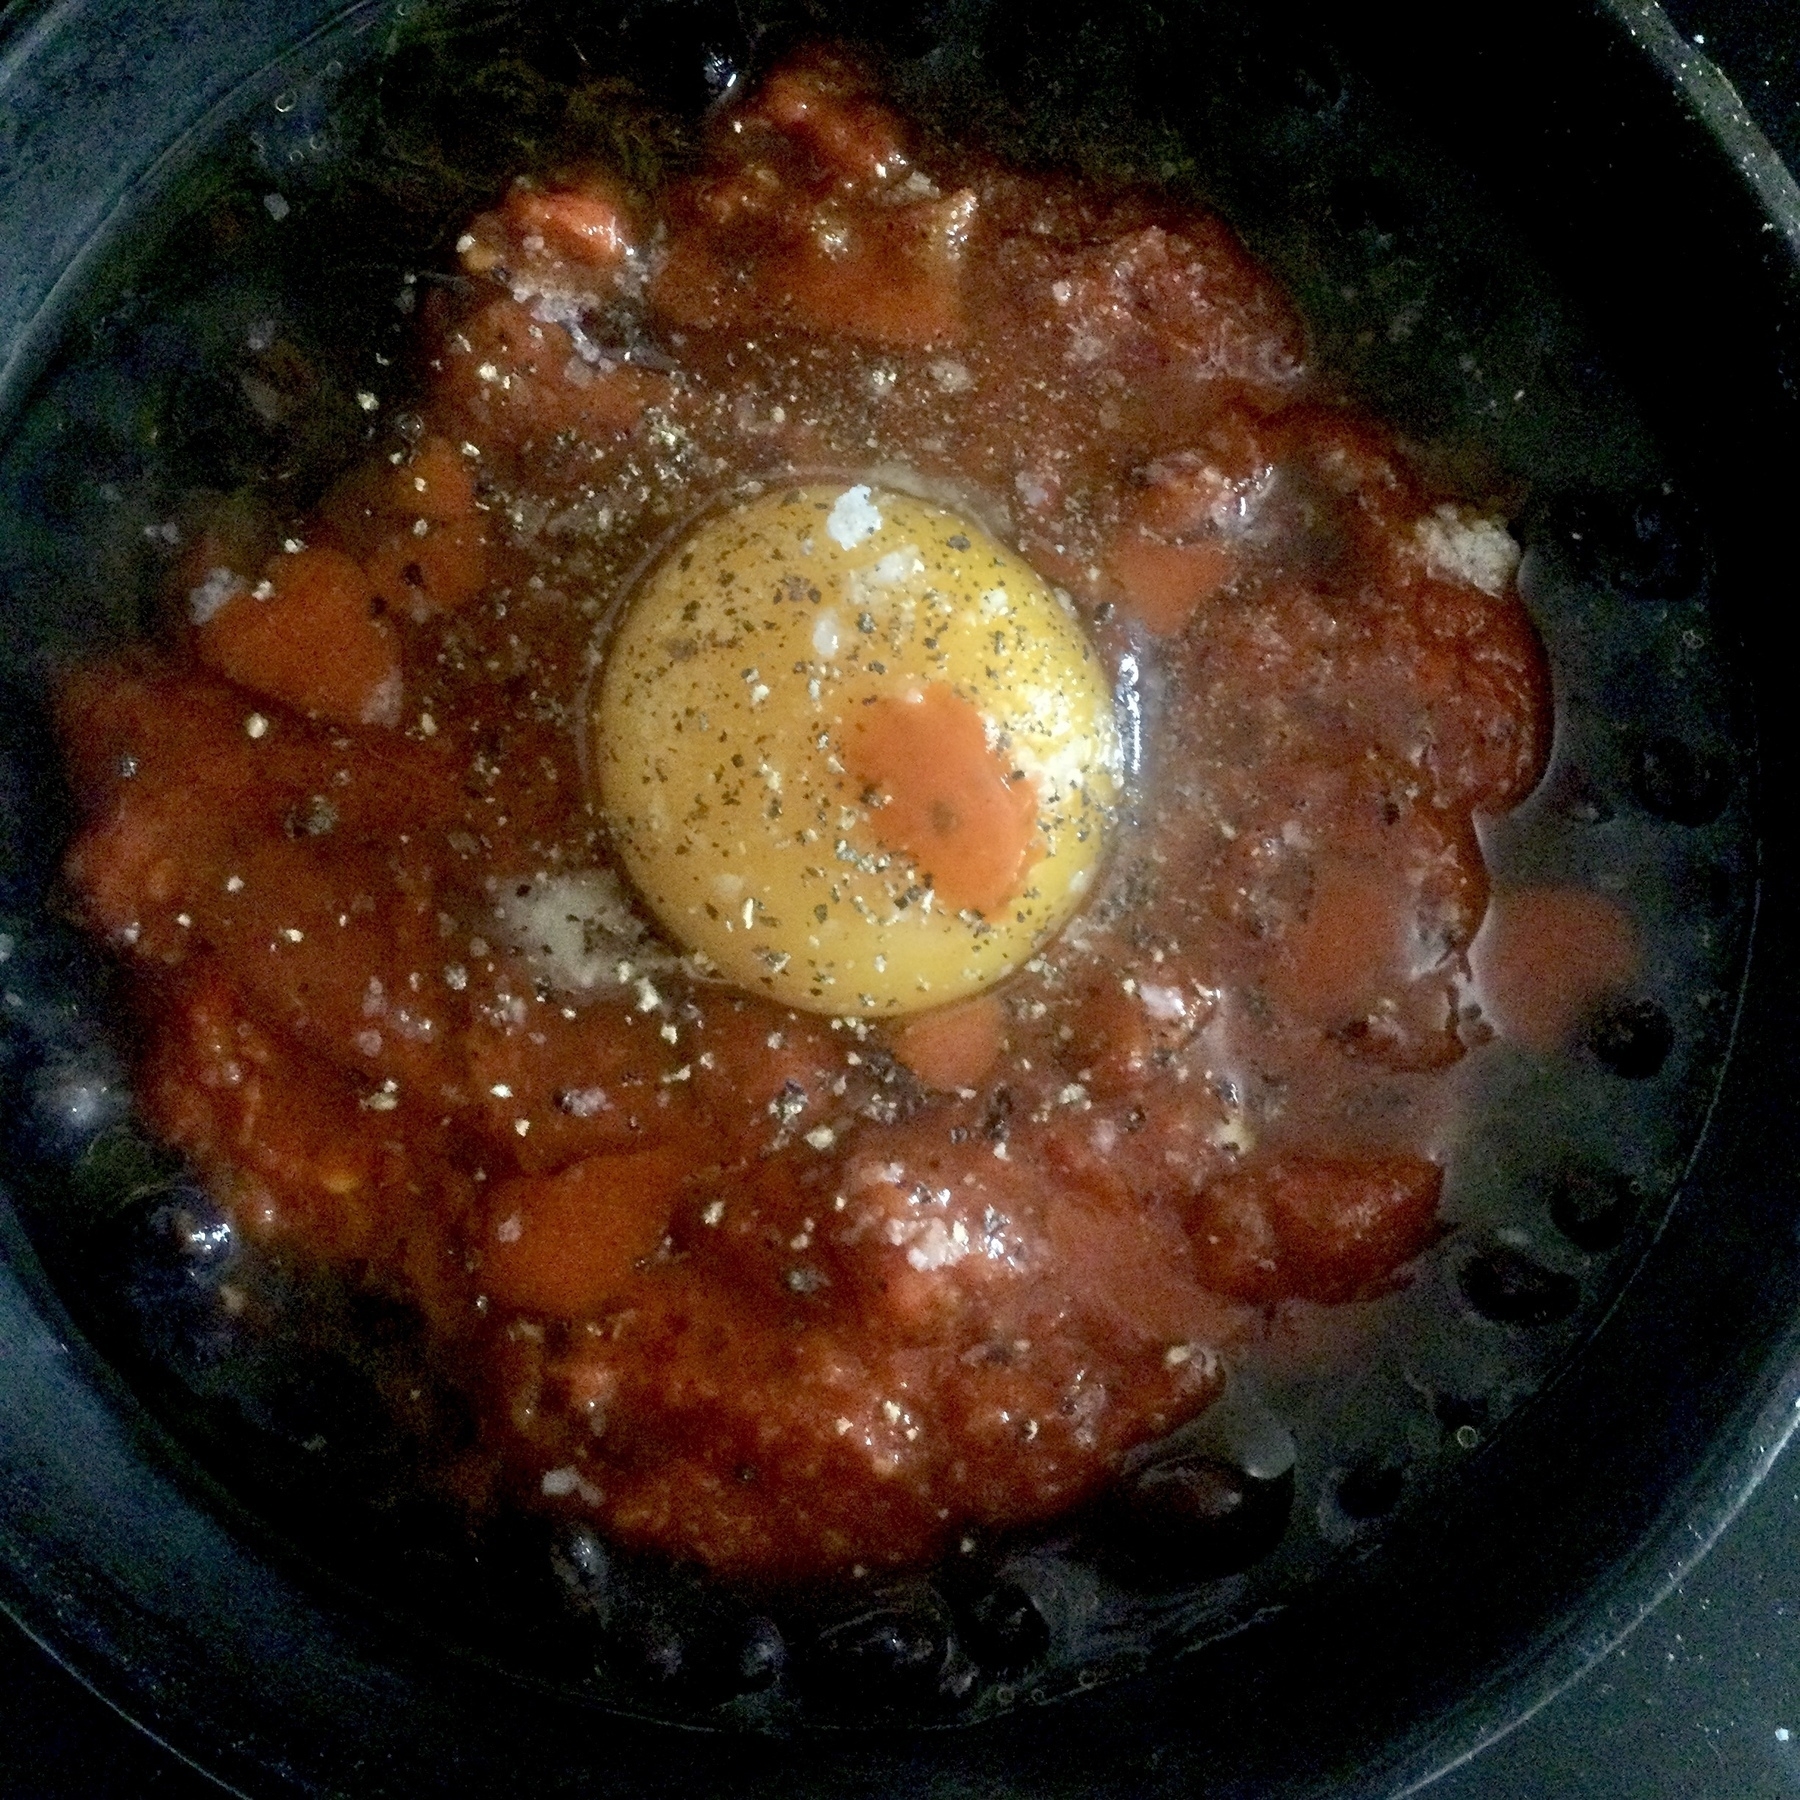 Cast iron pan, black beans, tomato sauce, an egg, and hot sauce.